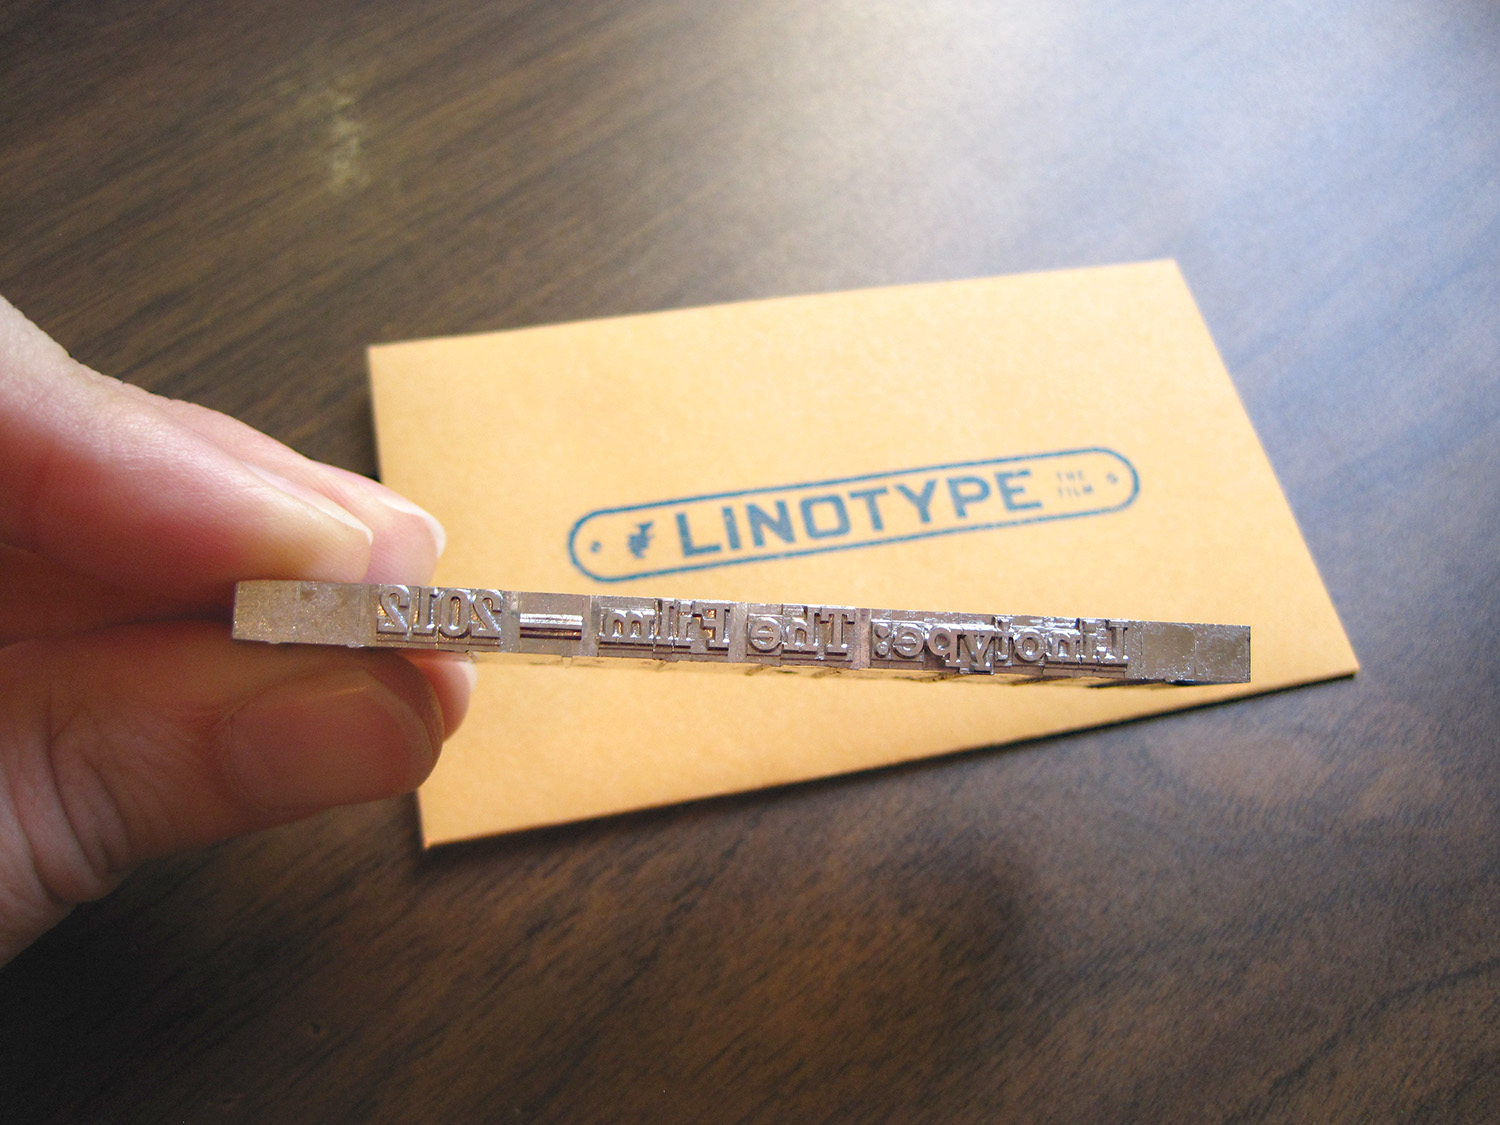 One of the more popular merch items was a custom Linotype slug